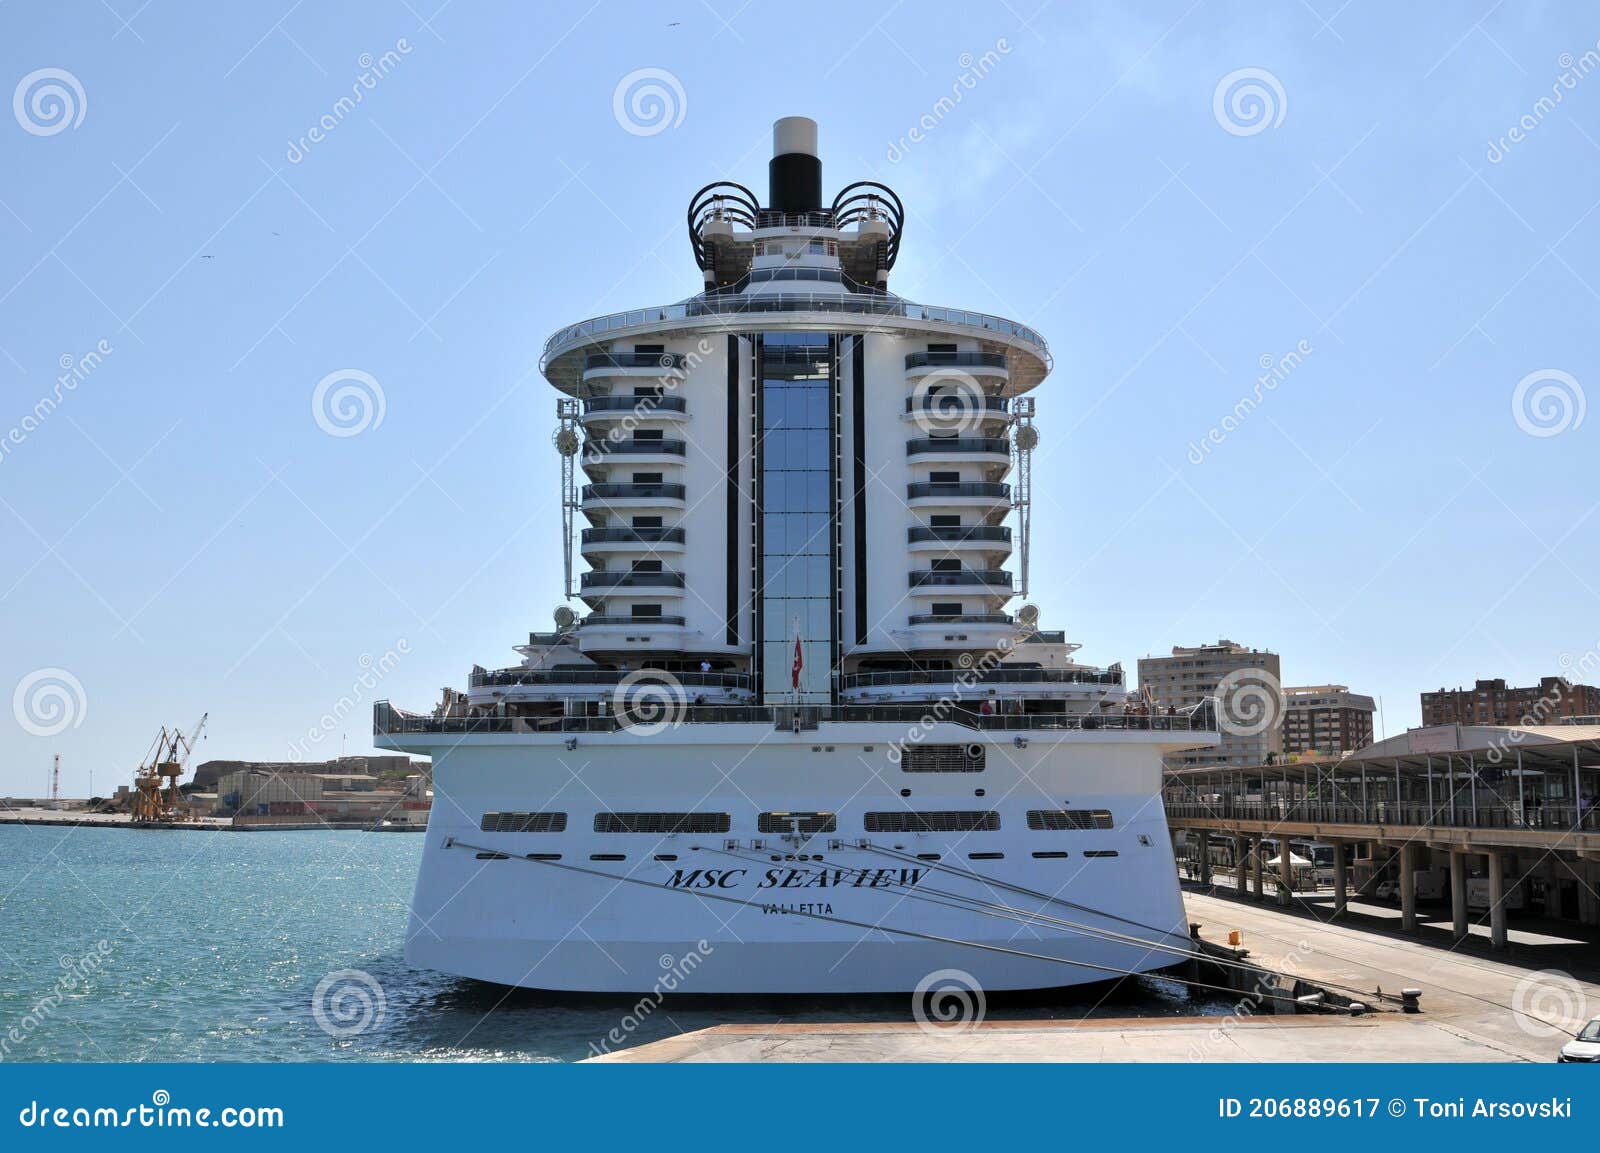 cruise ships docked in palma